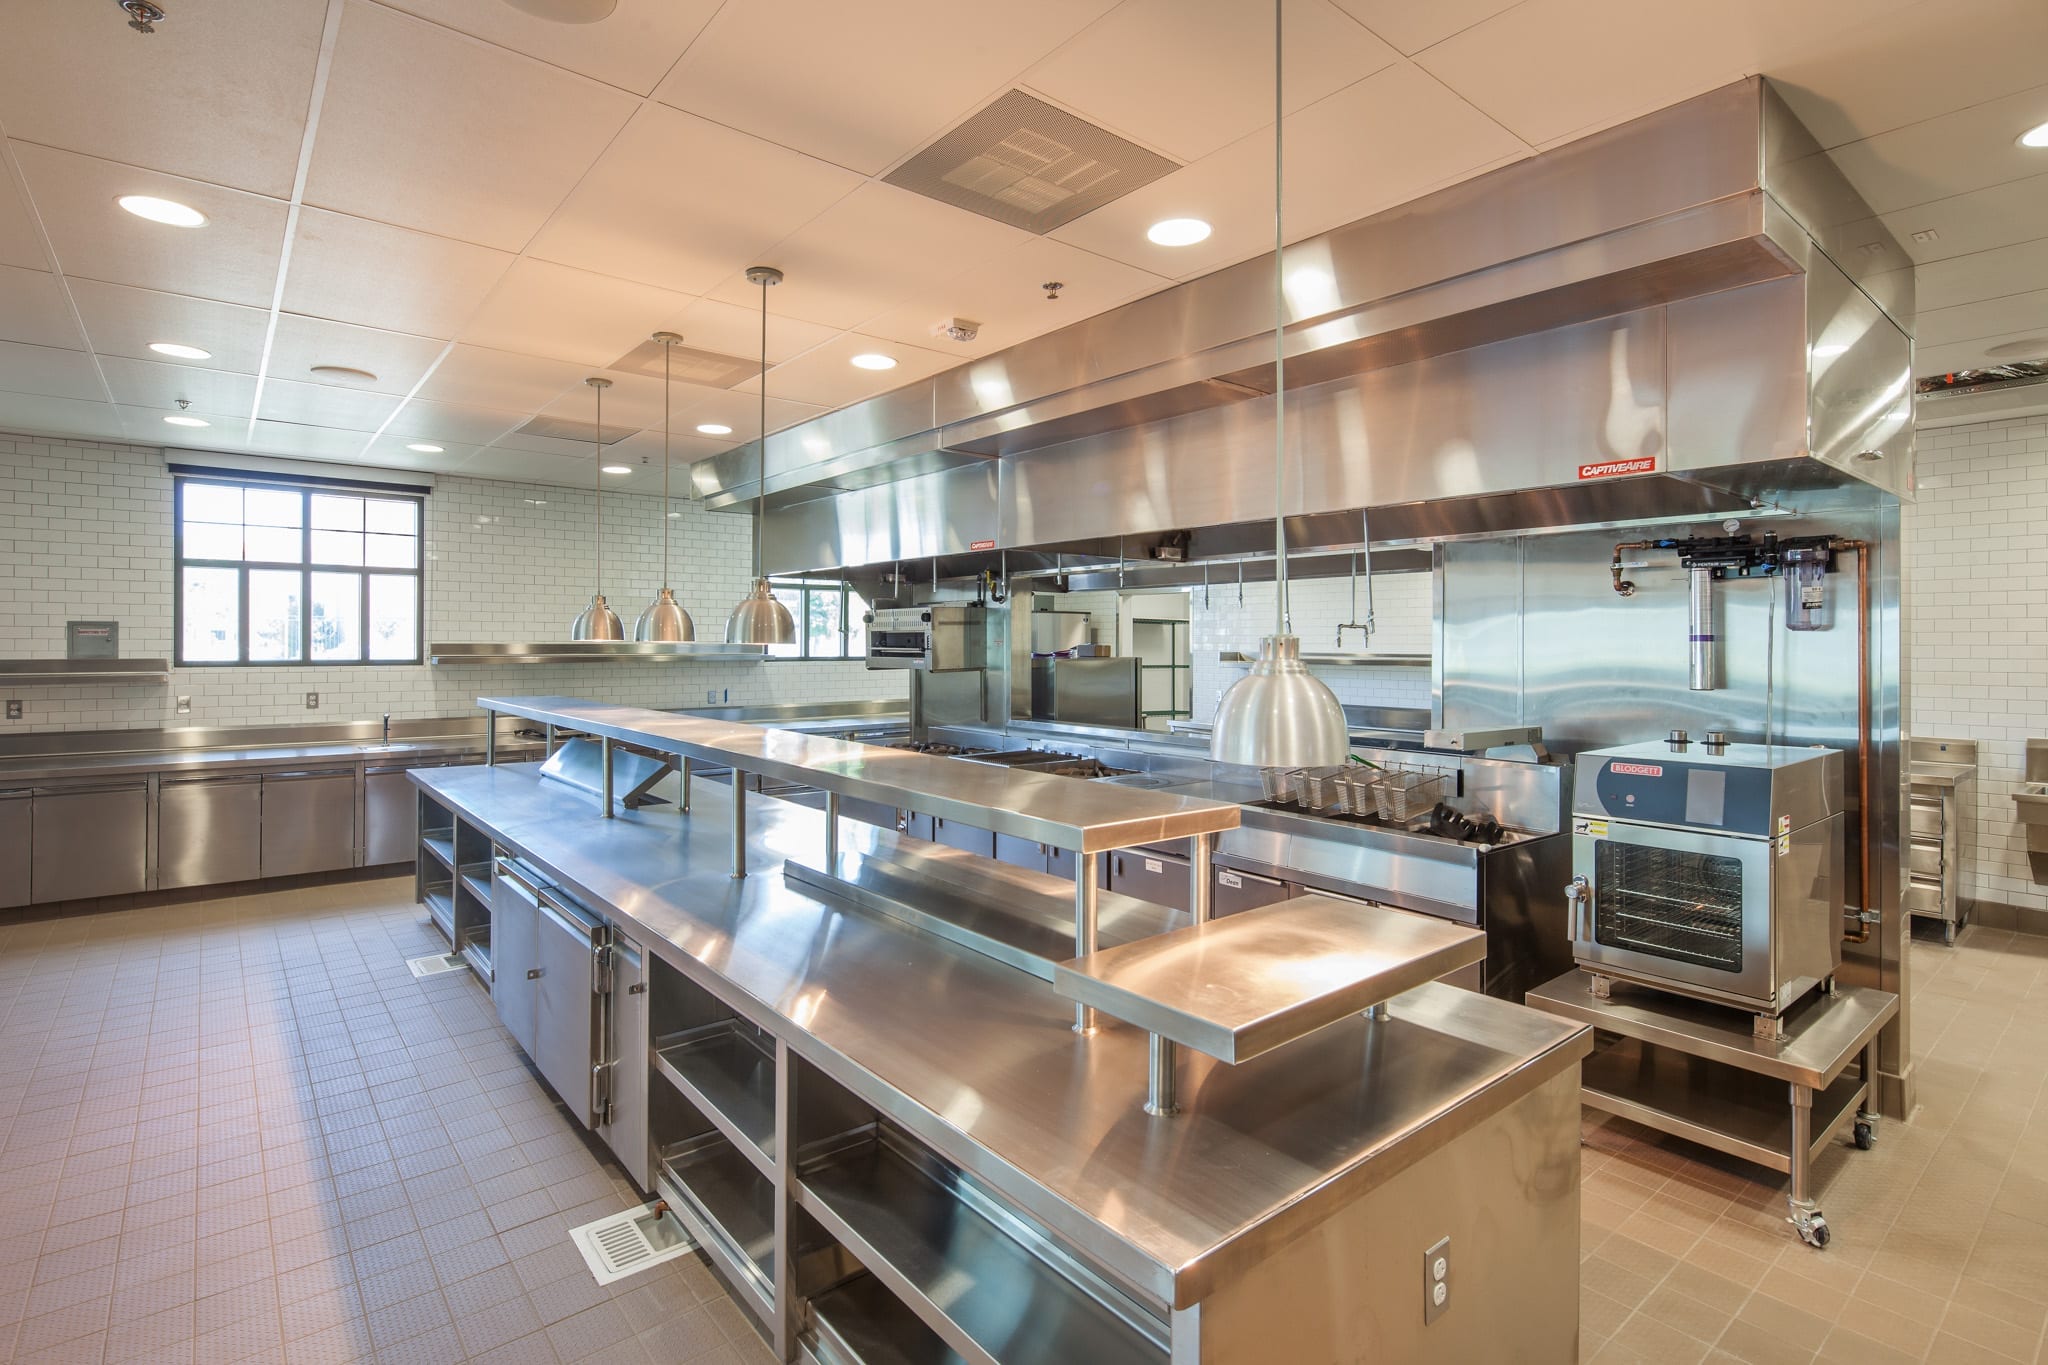 Long Beach City College kitchen.